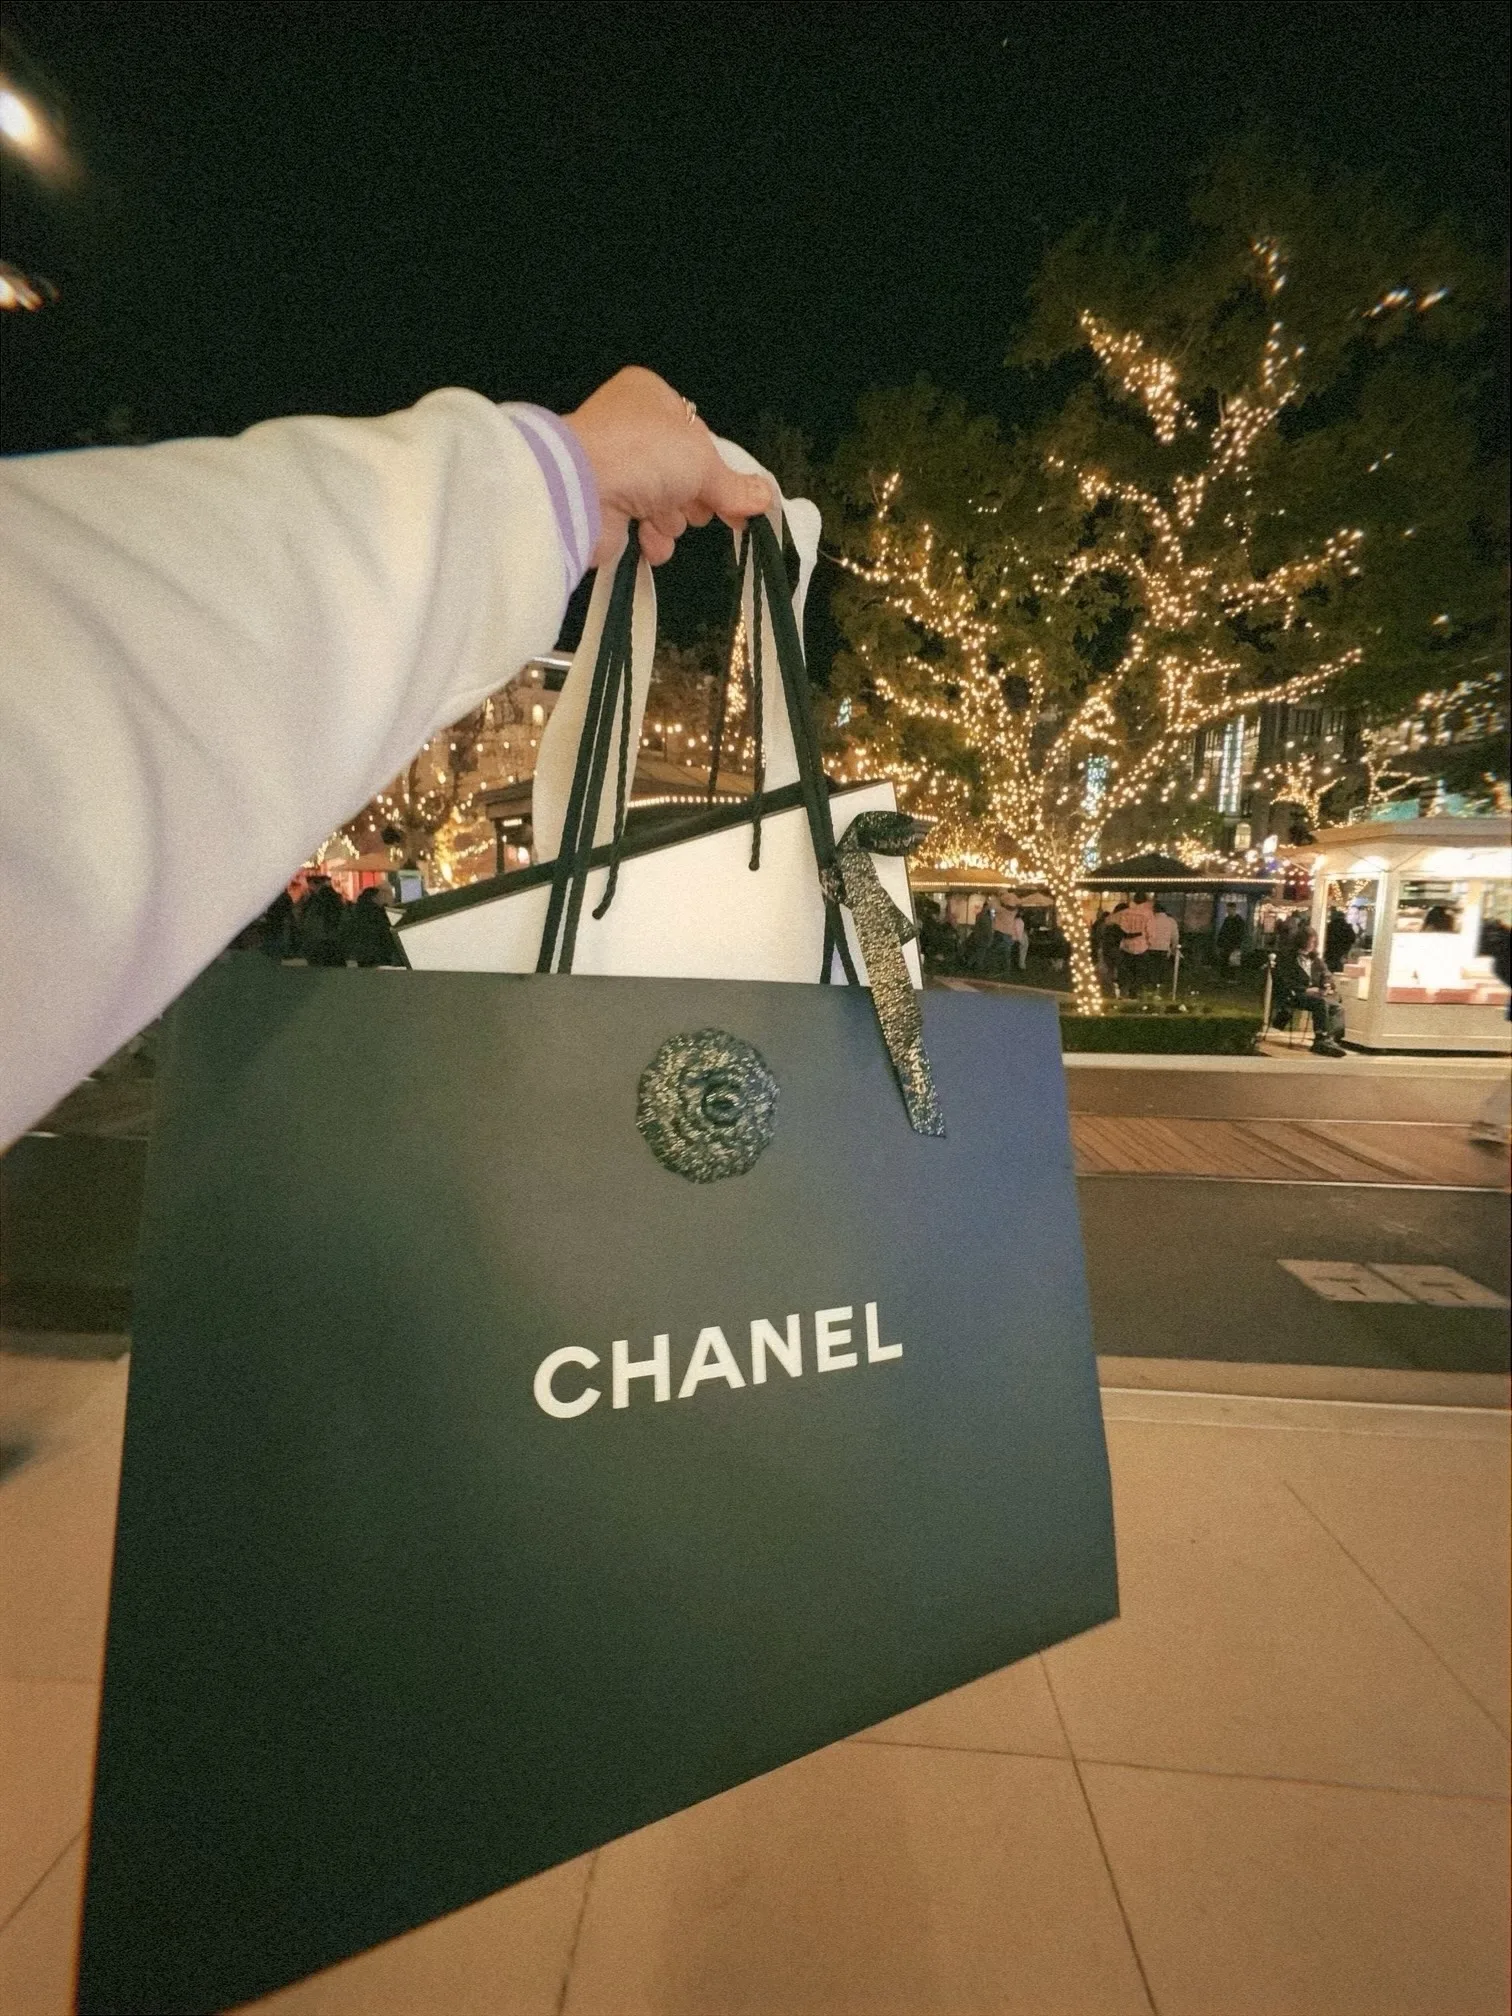 Chanel Americana at Brand